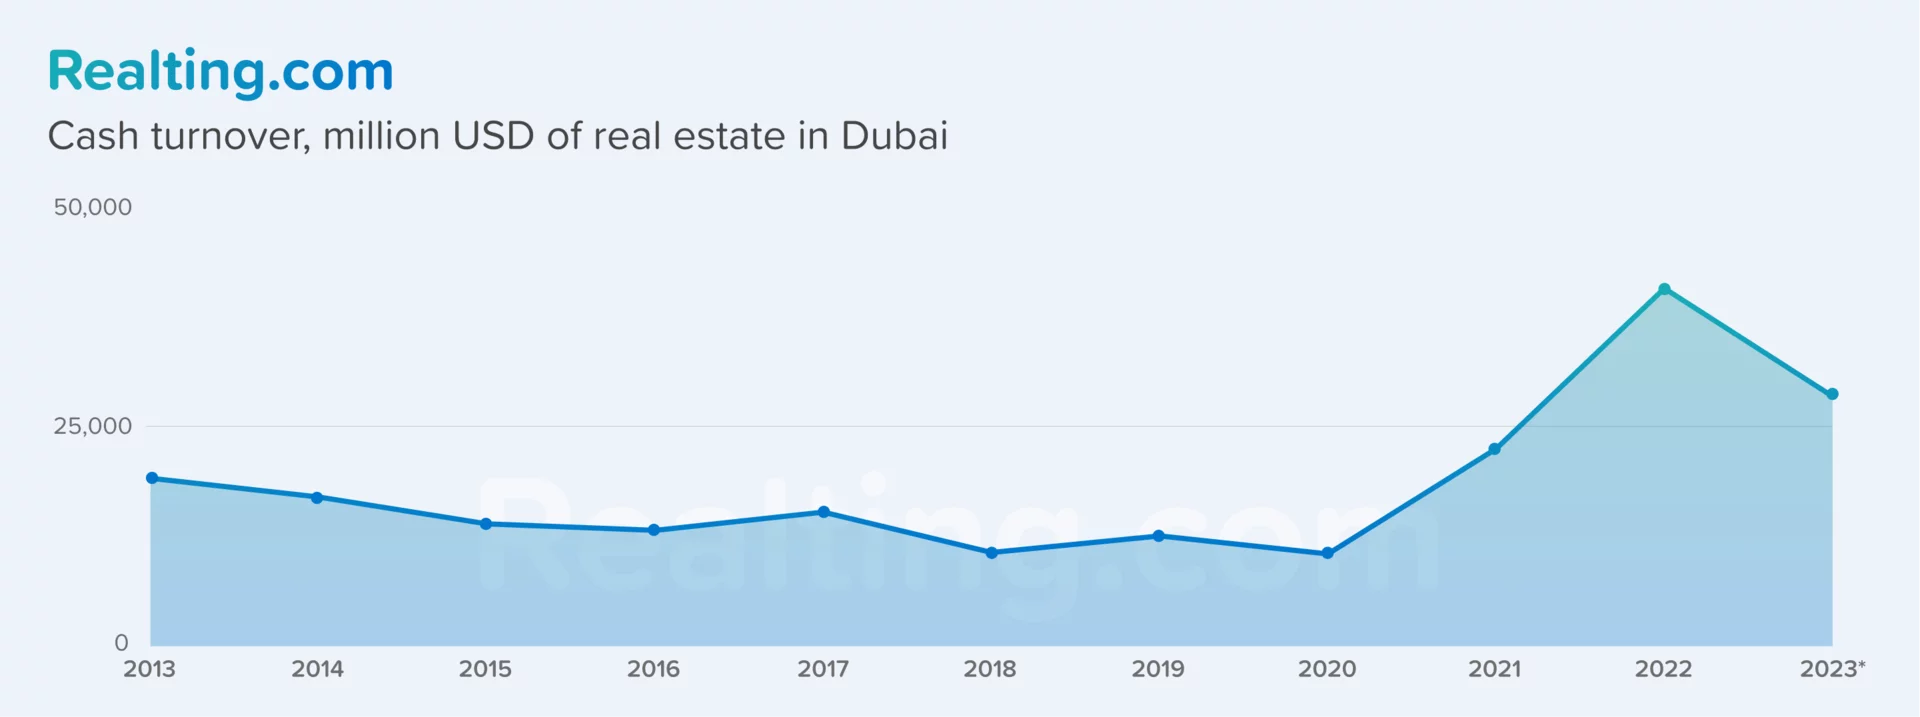 Cash turnover, million USD of real estate in Dubai